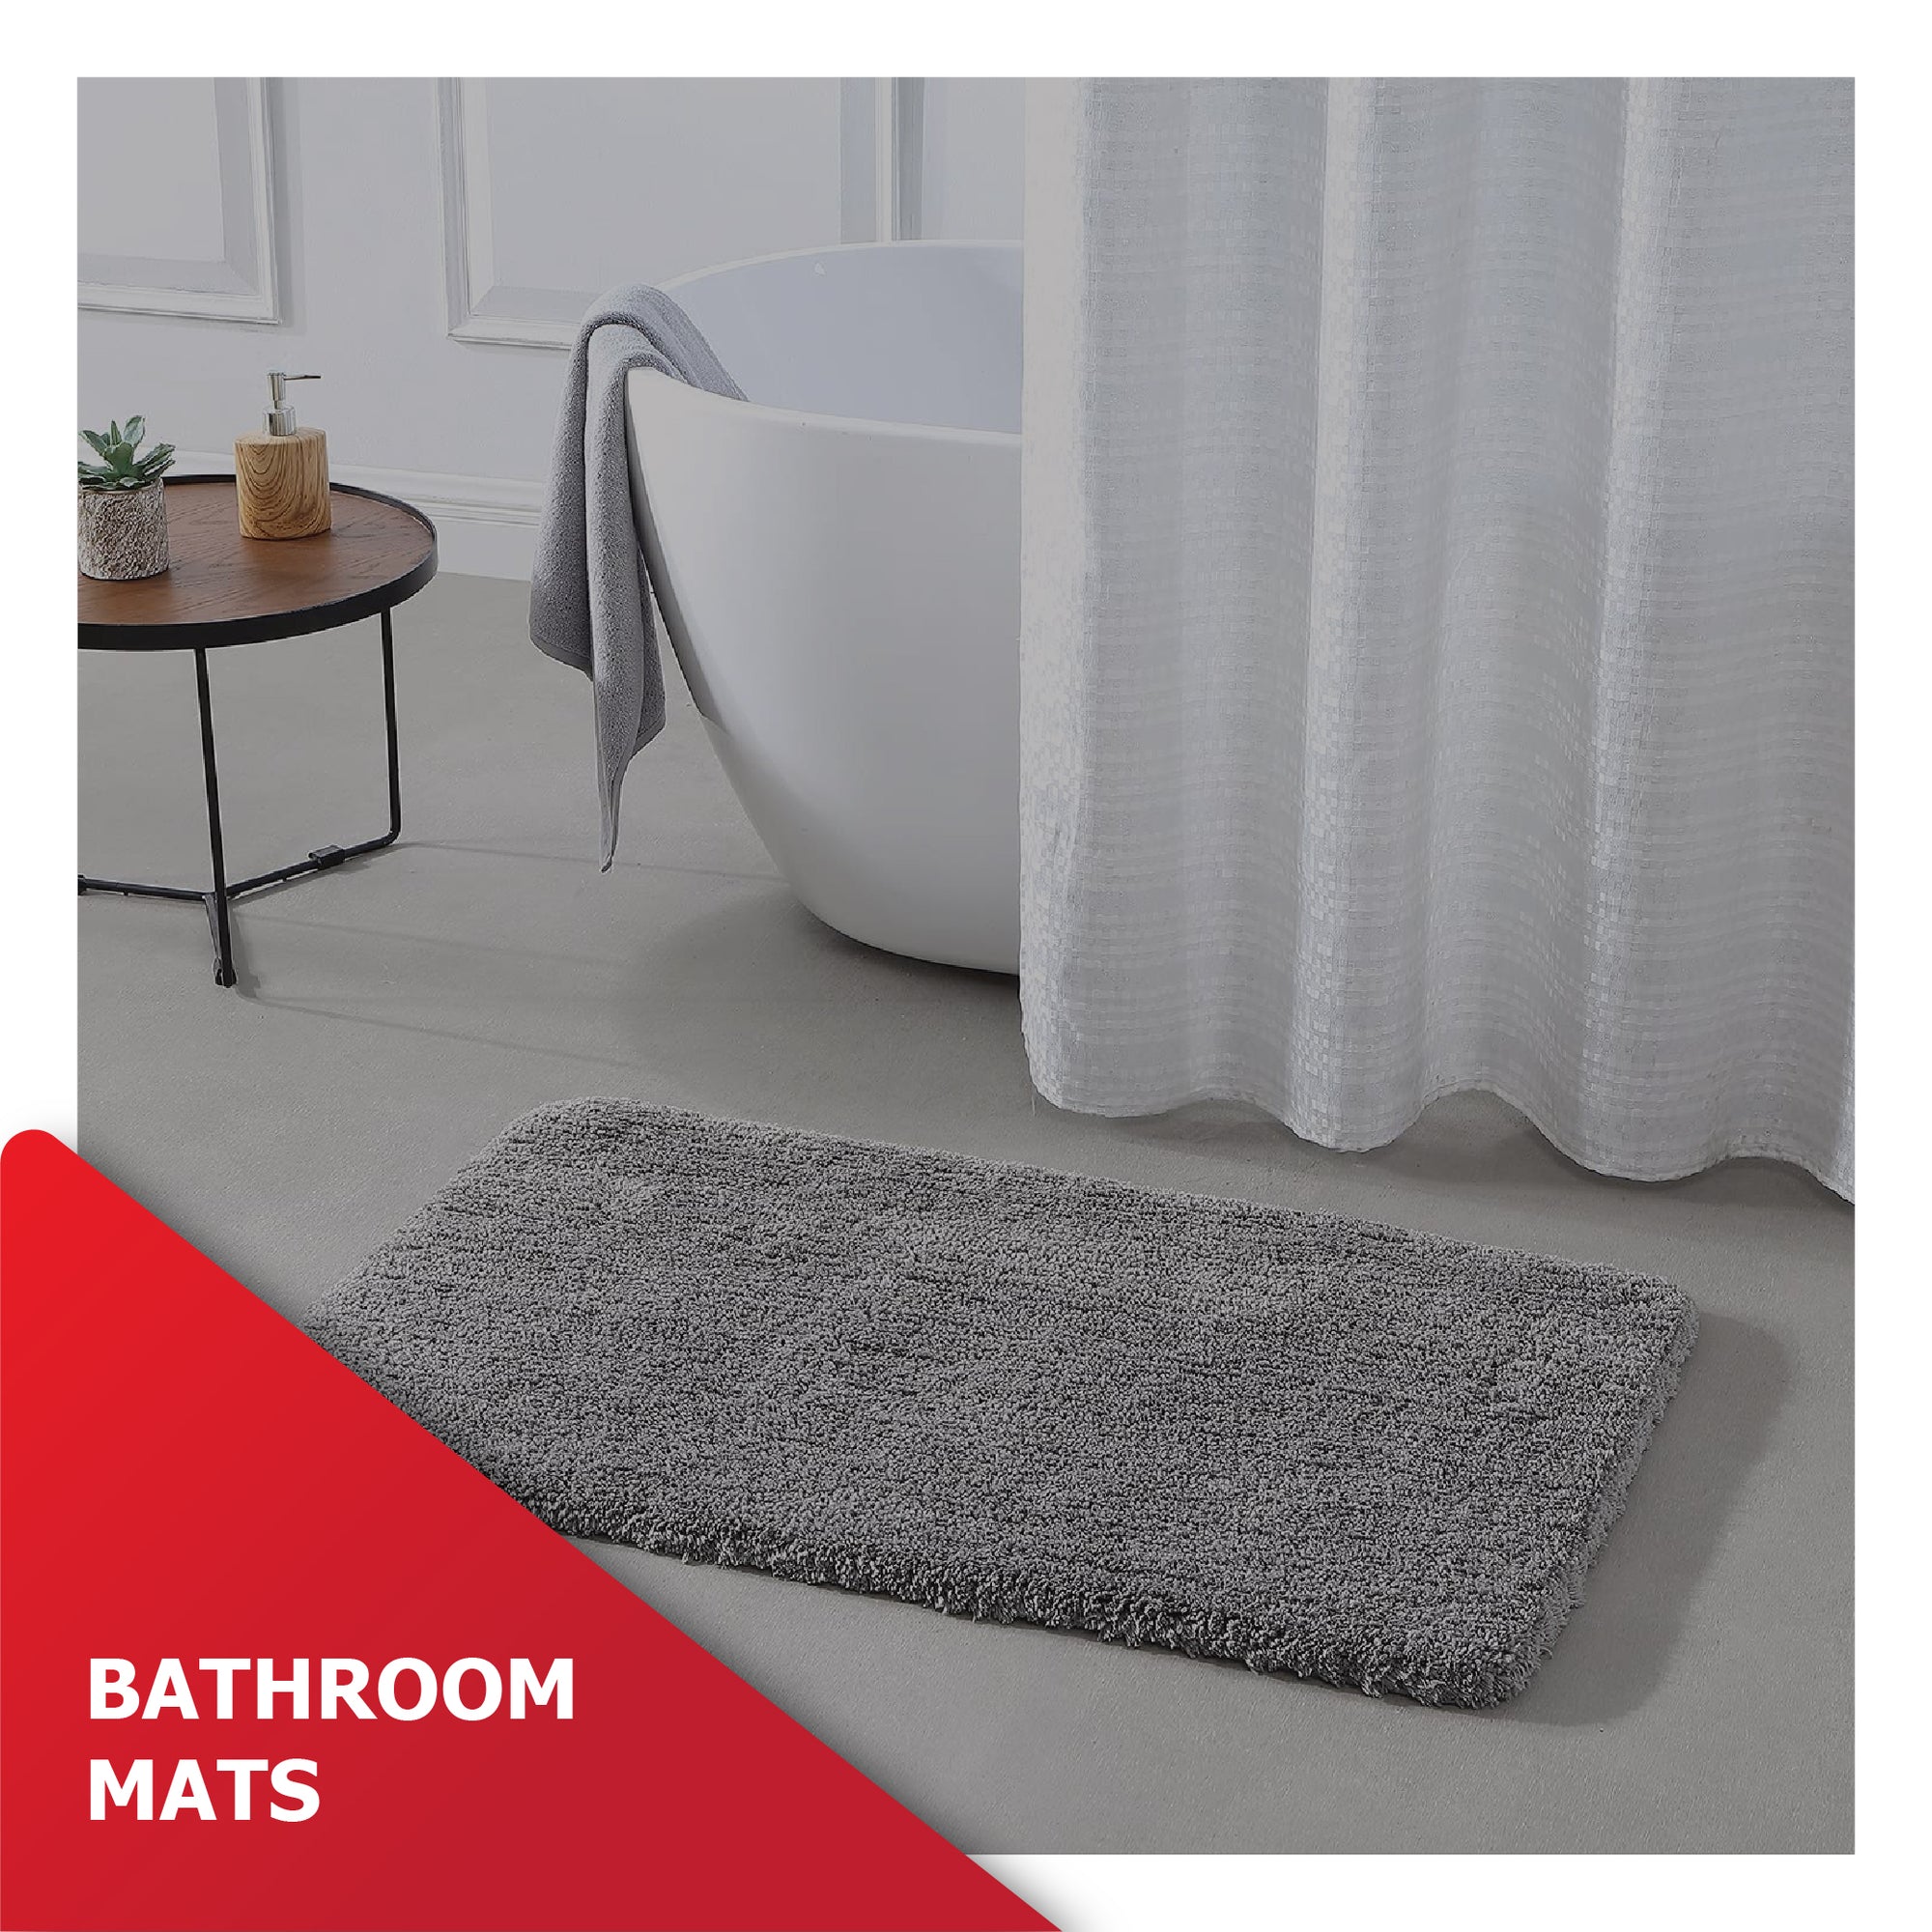 Bathroom Mats | Category